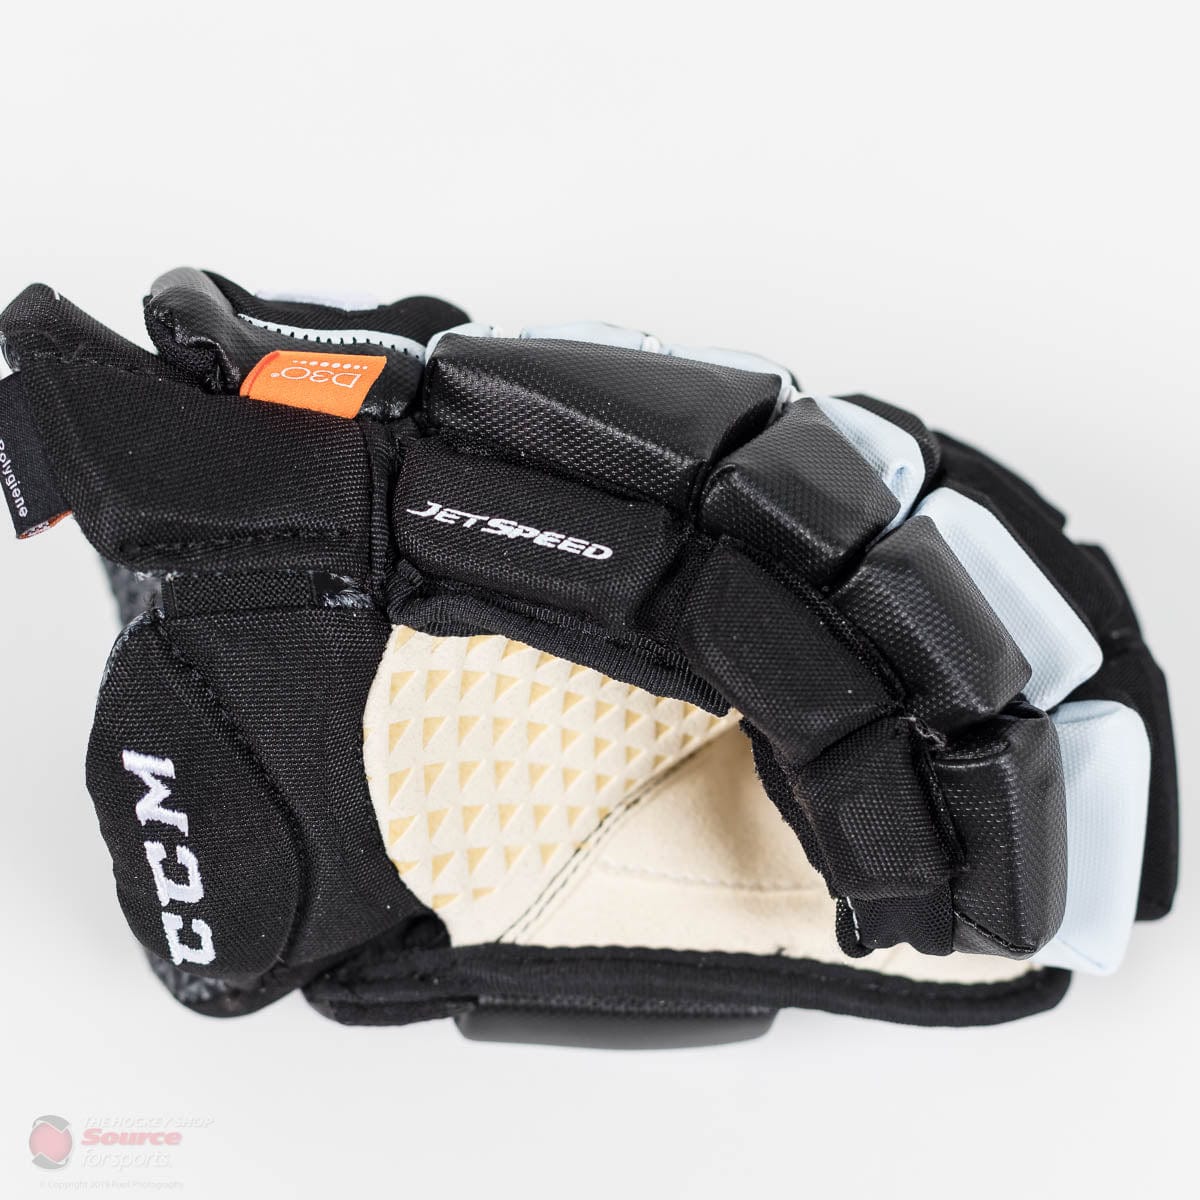 CCM Jetspeed FT1 Junior Hockey Gloves